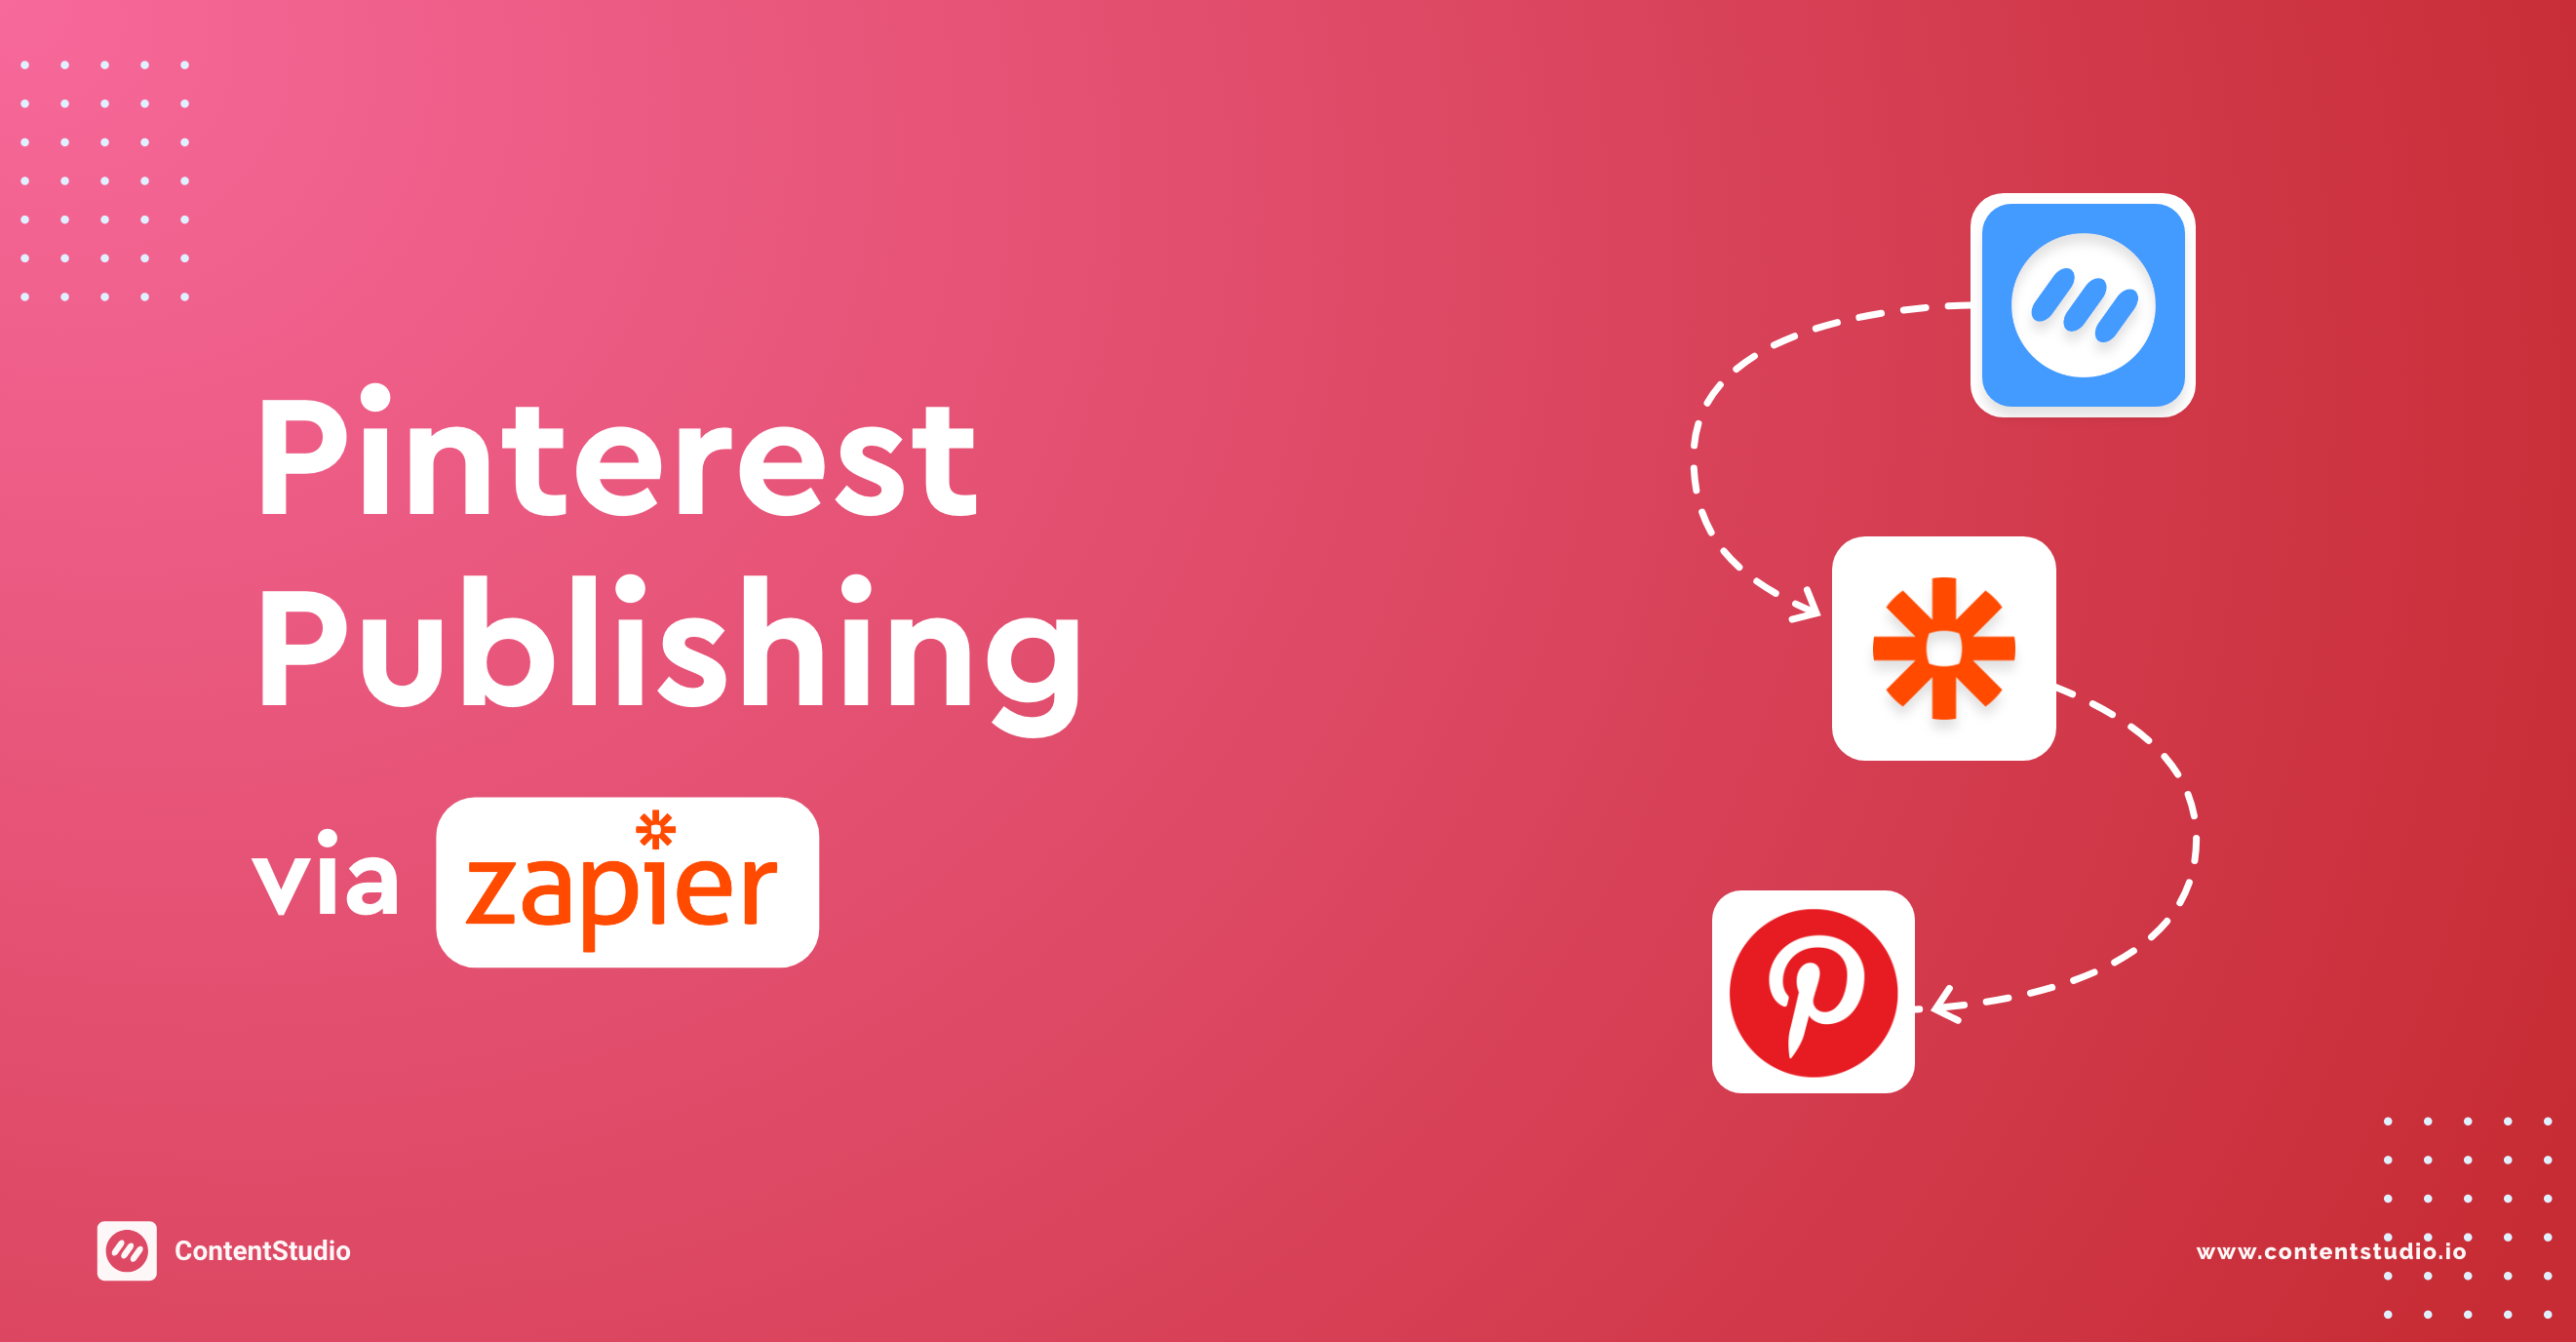 Pinterest Publishing